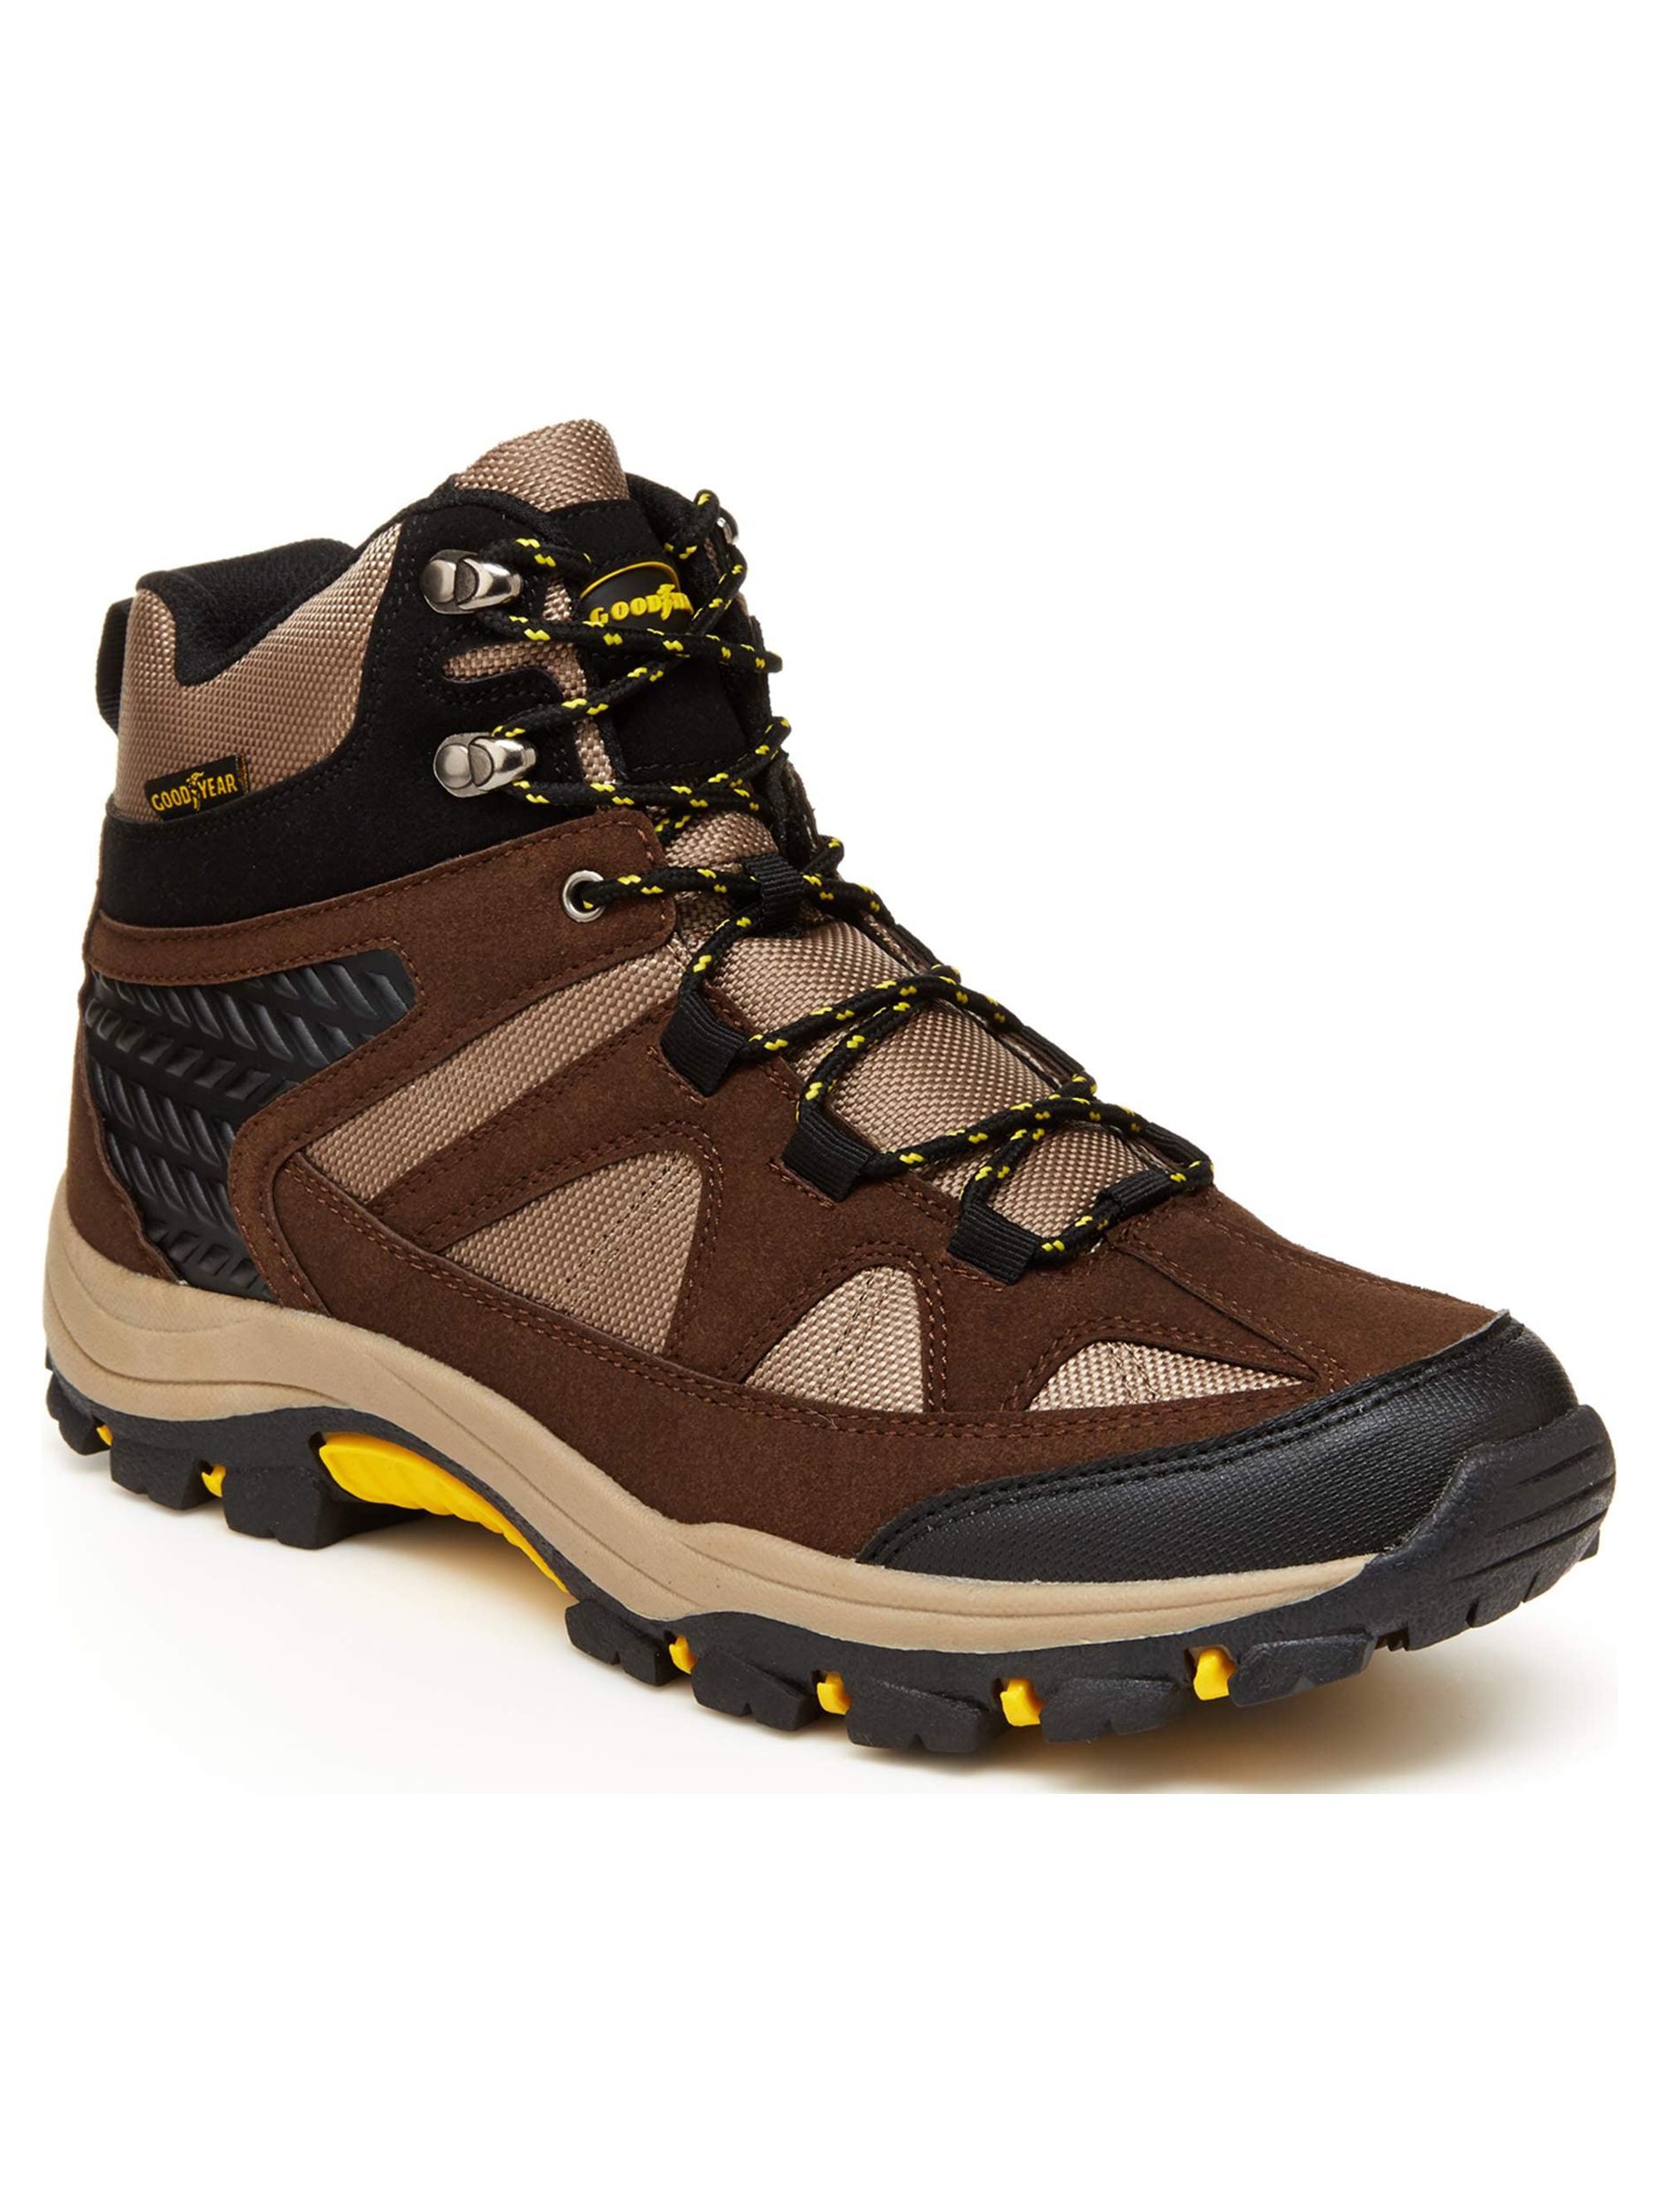 Goodyear Men's Teton Outdoor Hiker Work Boots - image 1 of 6